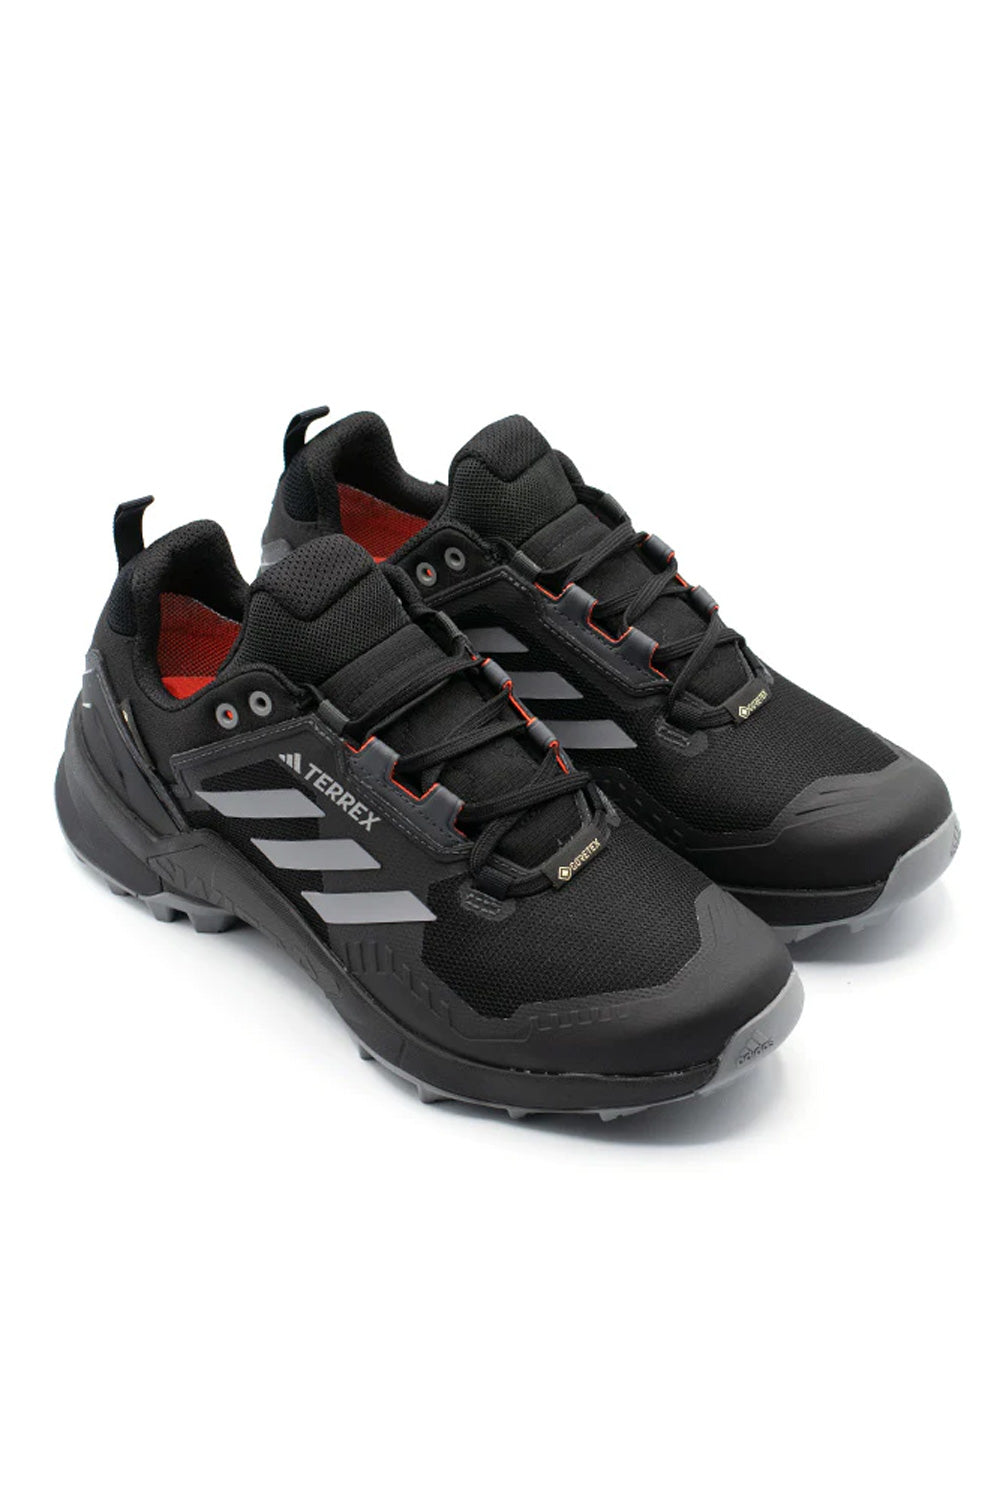 Adidas Terrex Swift R3 GTX Shoe Core Black / Grey Three / Solar Red - BONKERS